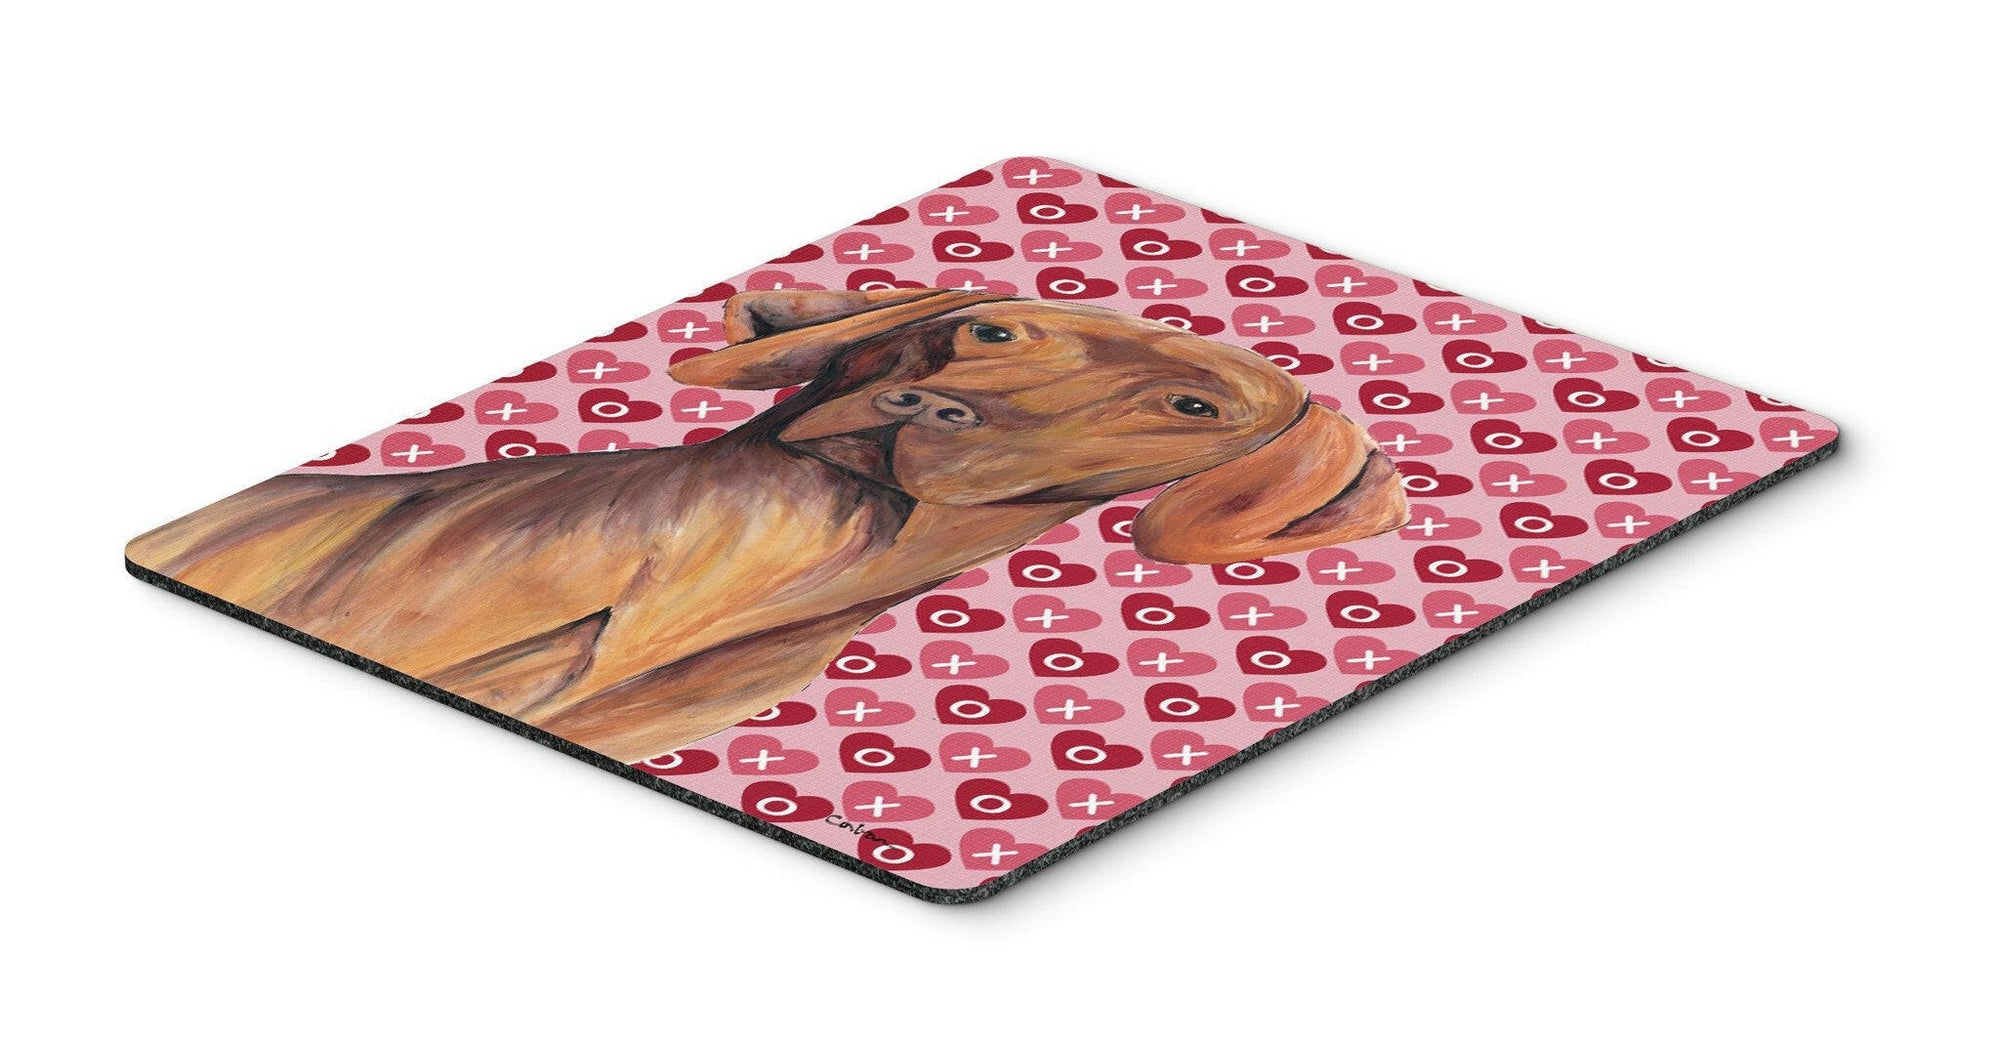 Vizsla Hearts Love and Valentine's Day Portrait Mouse Pad, Hot Pad or Trivet by Caroline's Treasures